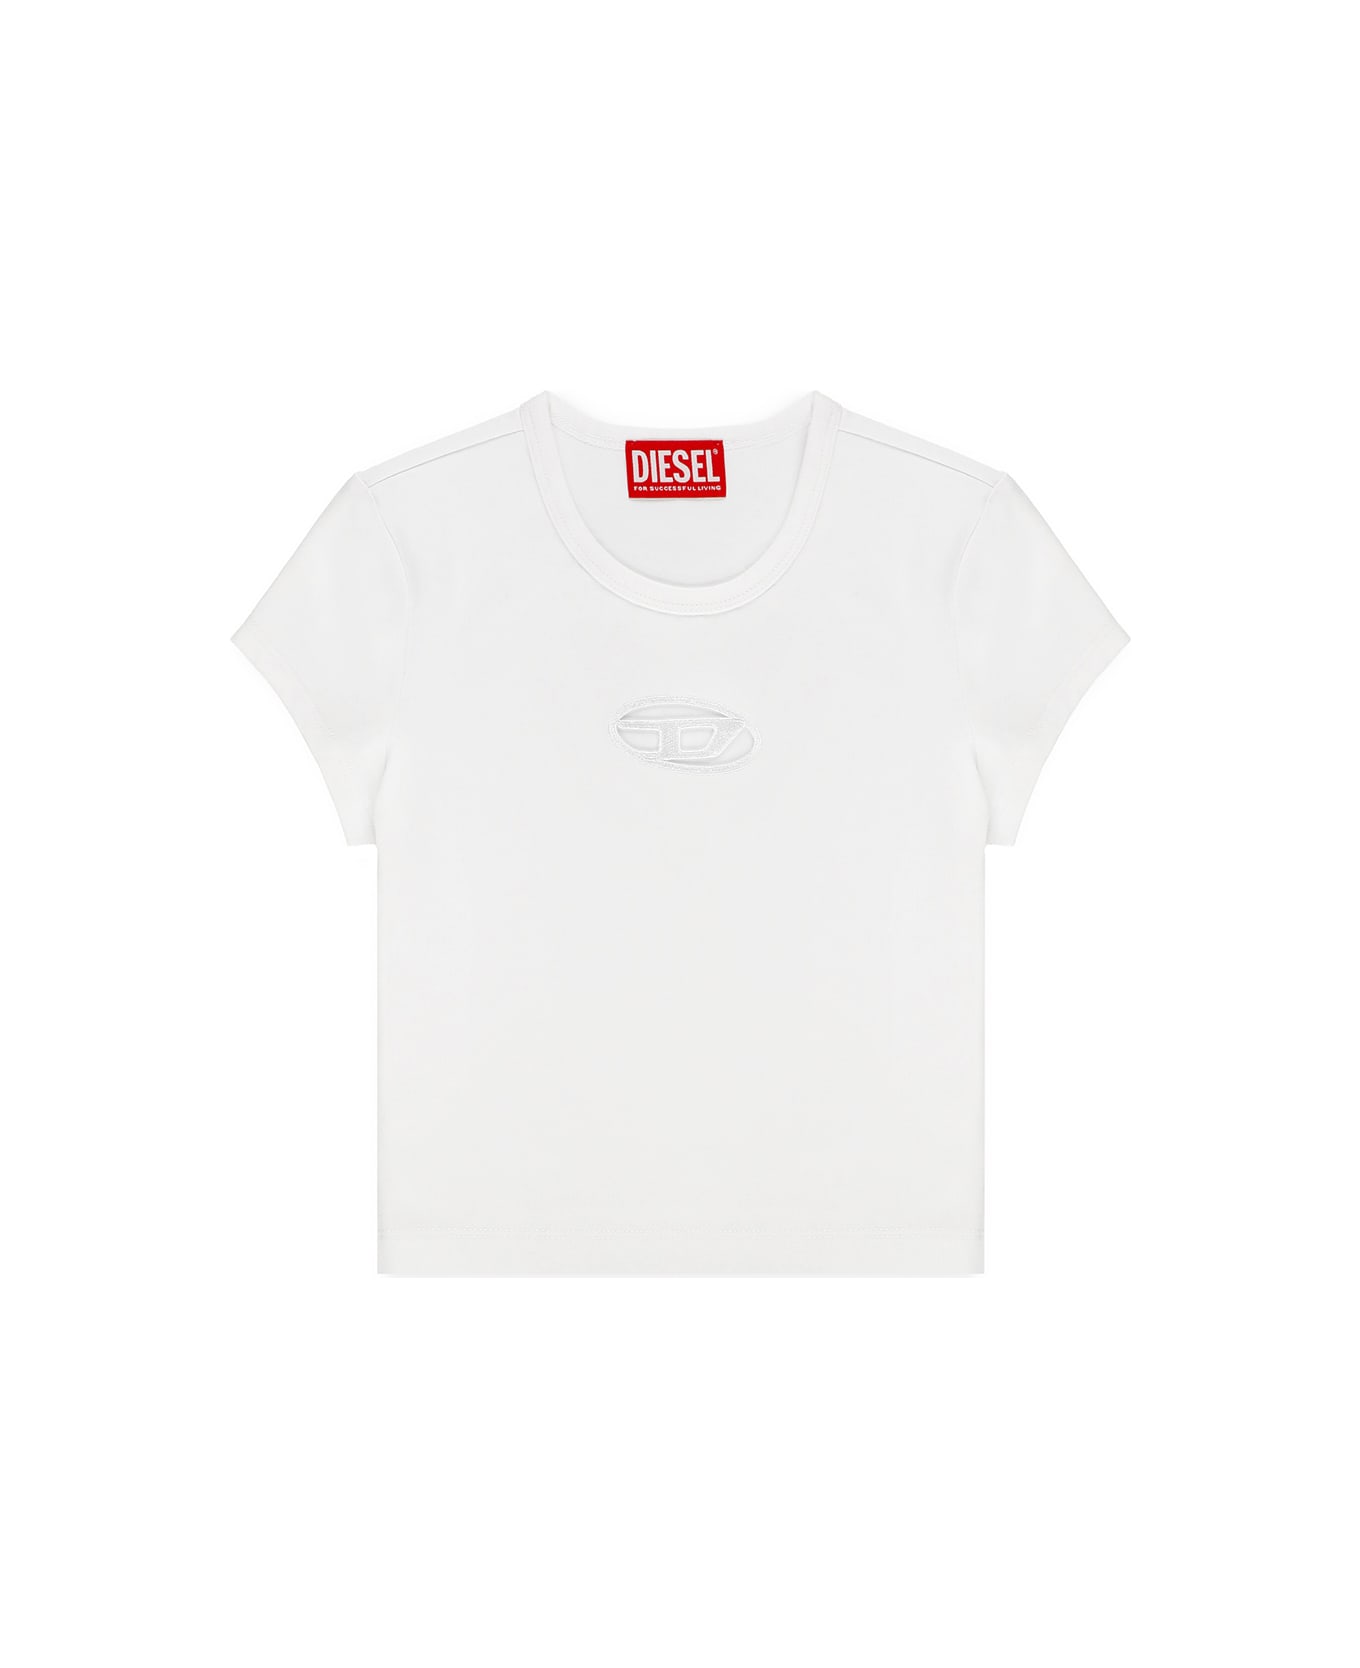 Diesel Tangie T-shirt - White